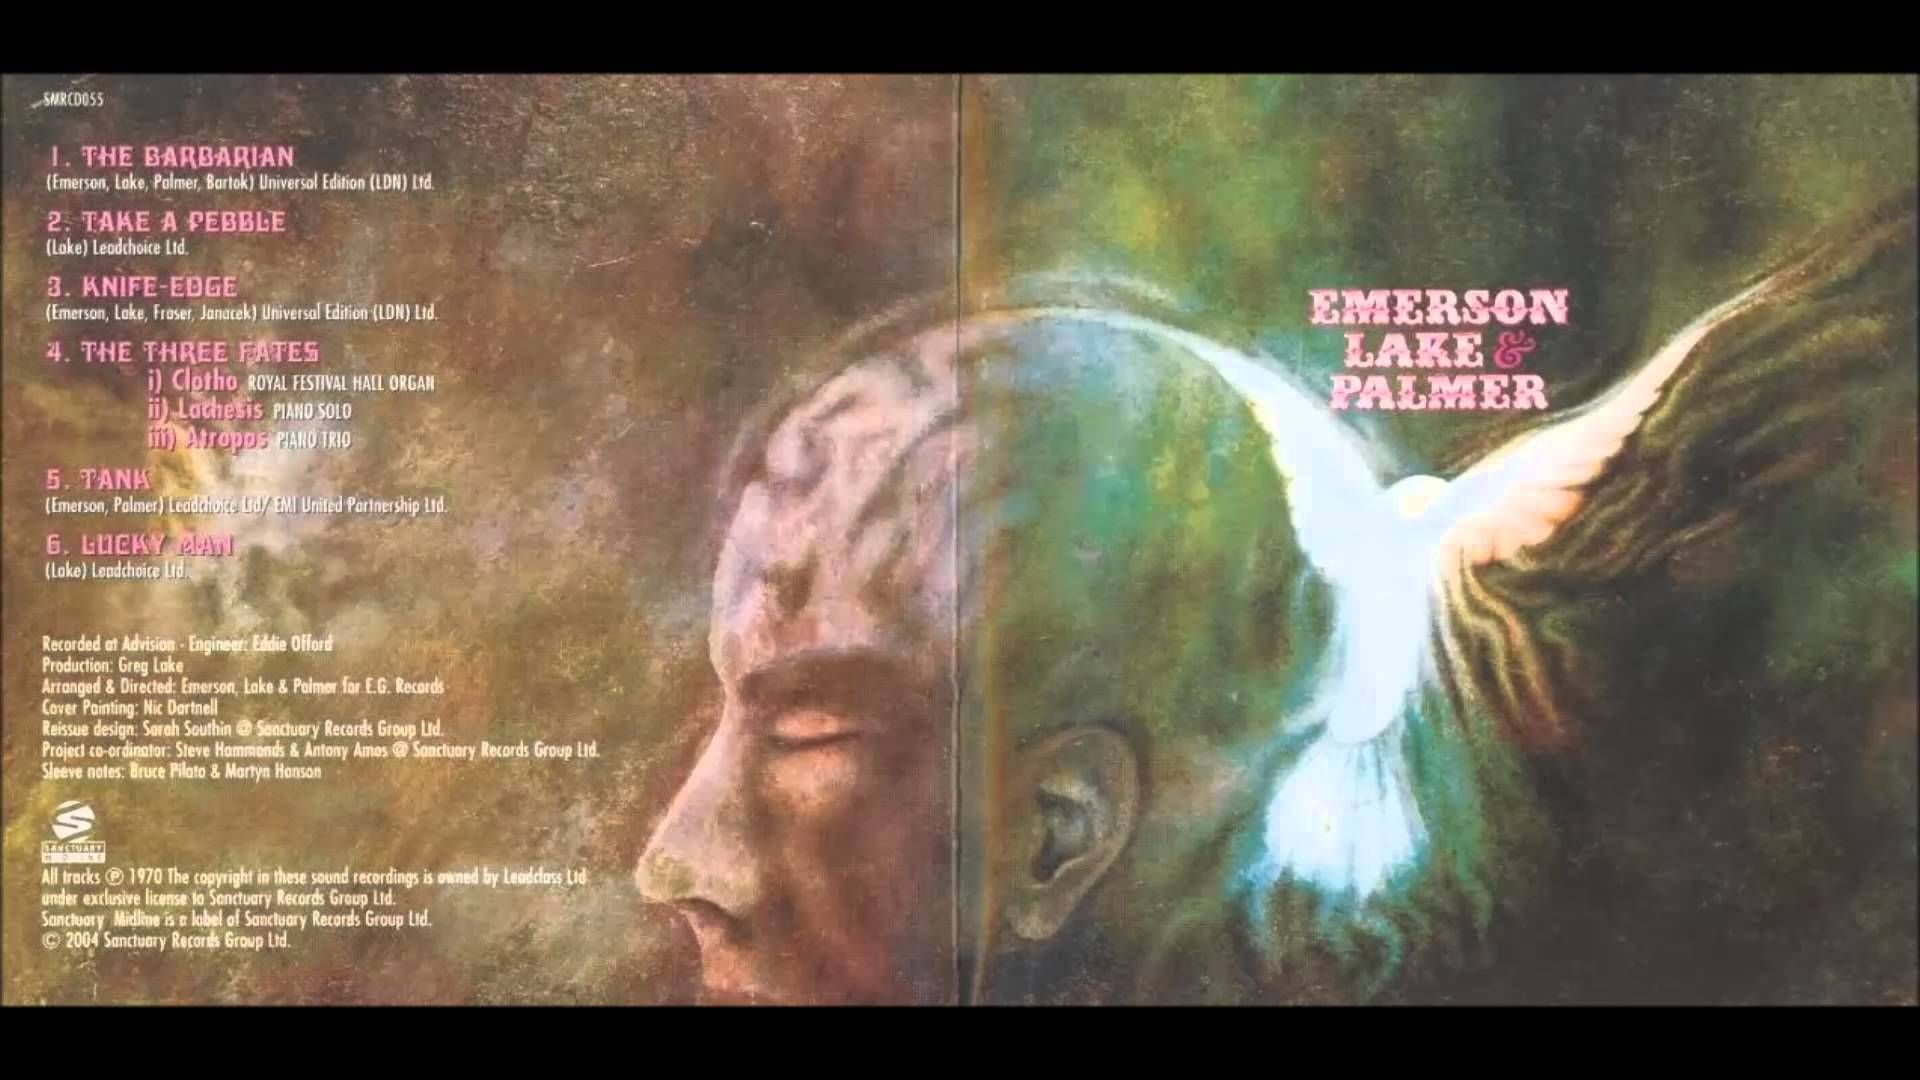 Emerson Lake & Palmer Lake & Palmer (1970) FULL ALBUM. Emerson lake & palmer, Emerson, Progressive rock